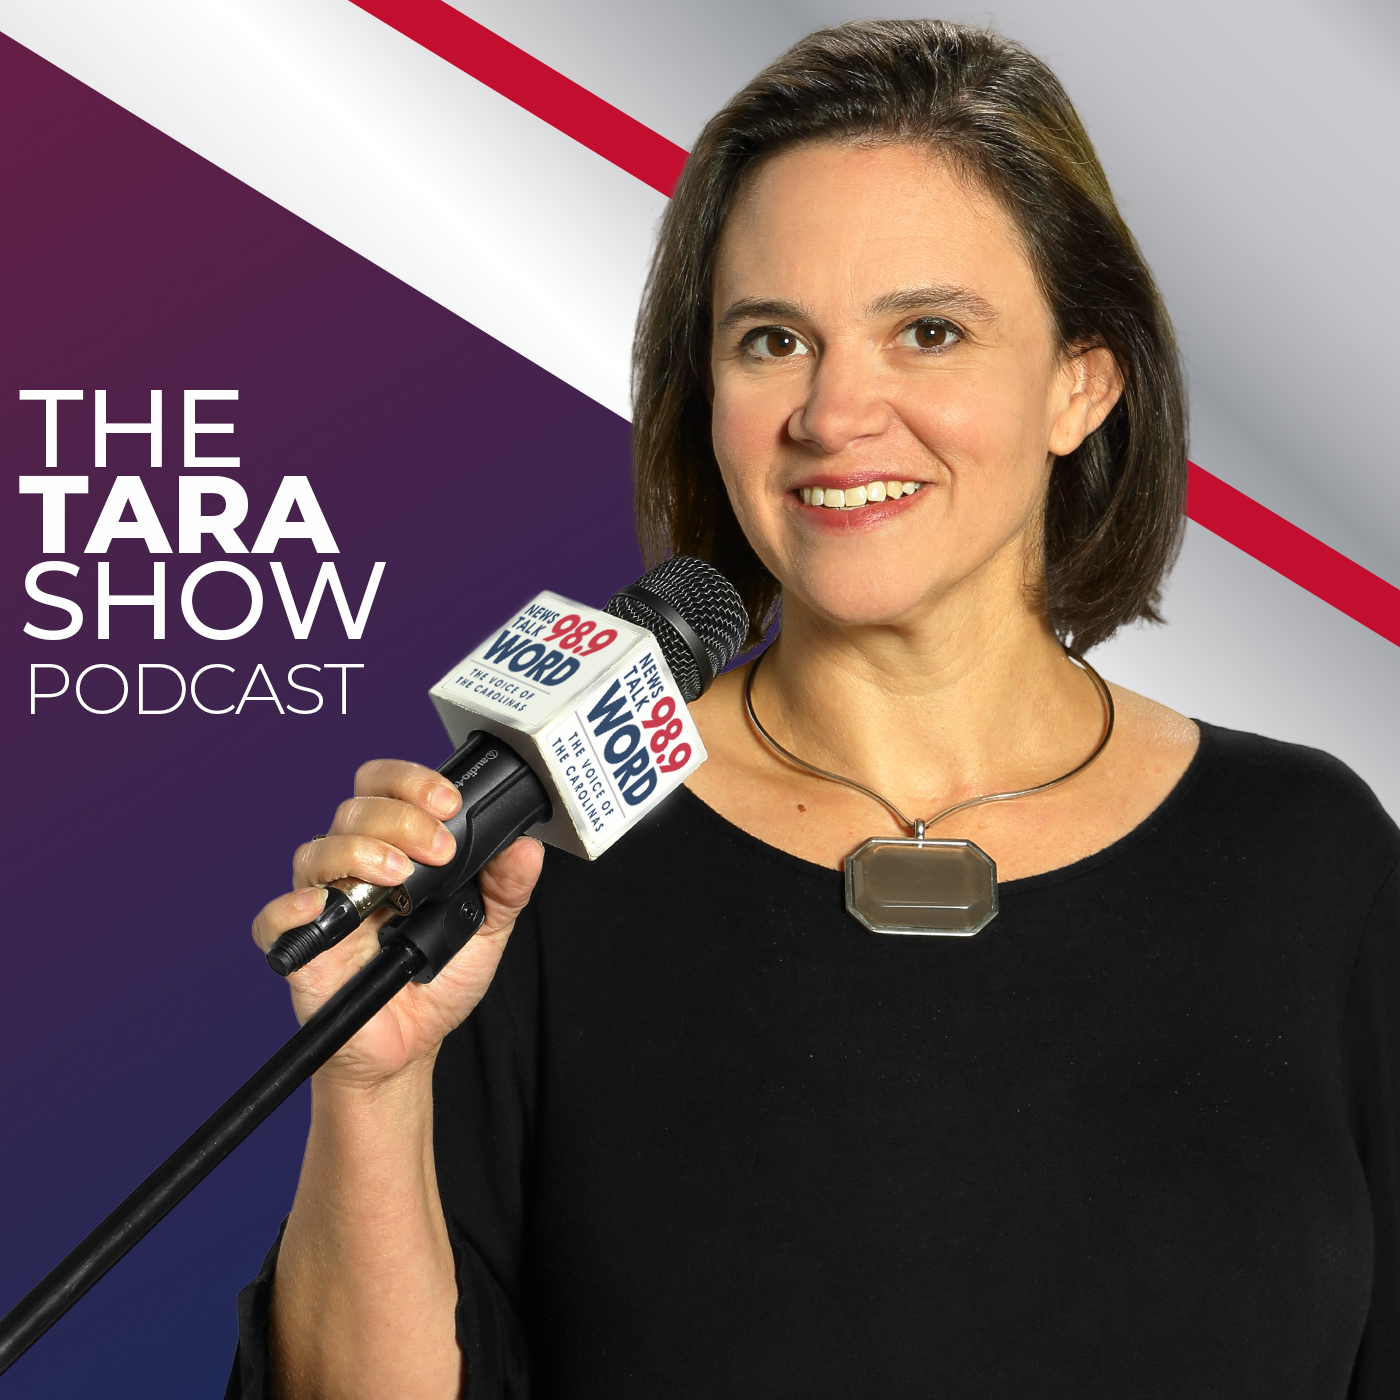 Hour 3: The Tara Show - “Libs Scramble to Convict Trump” “The Hypocrisy of Reverend Livingston” “The Conservative Voice with Dr. Bill Devore” “False Gospel of Livingston"